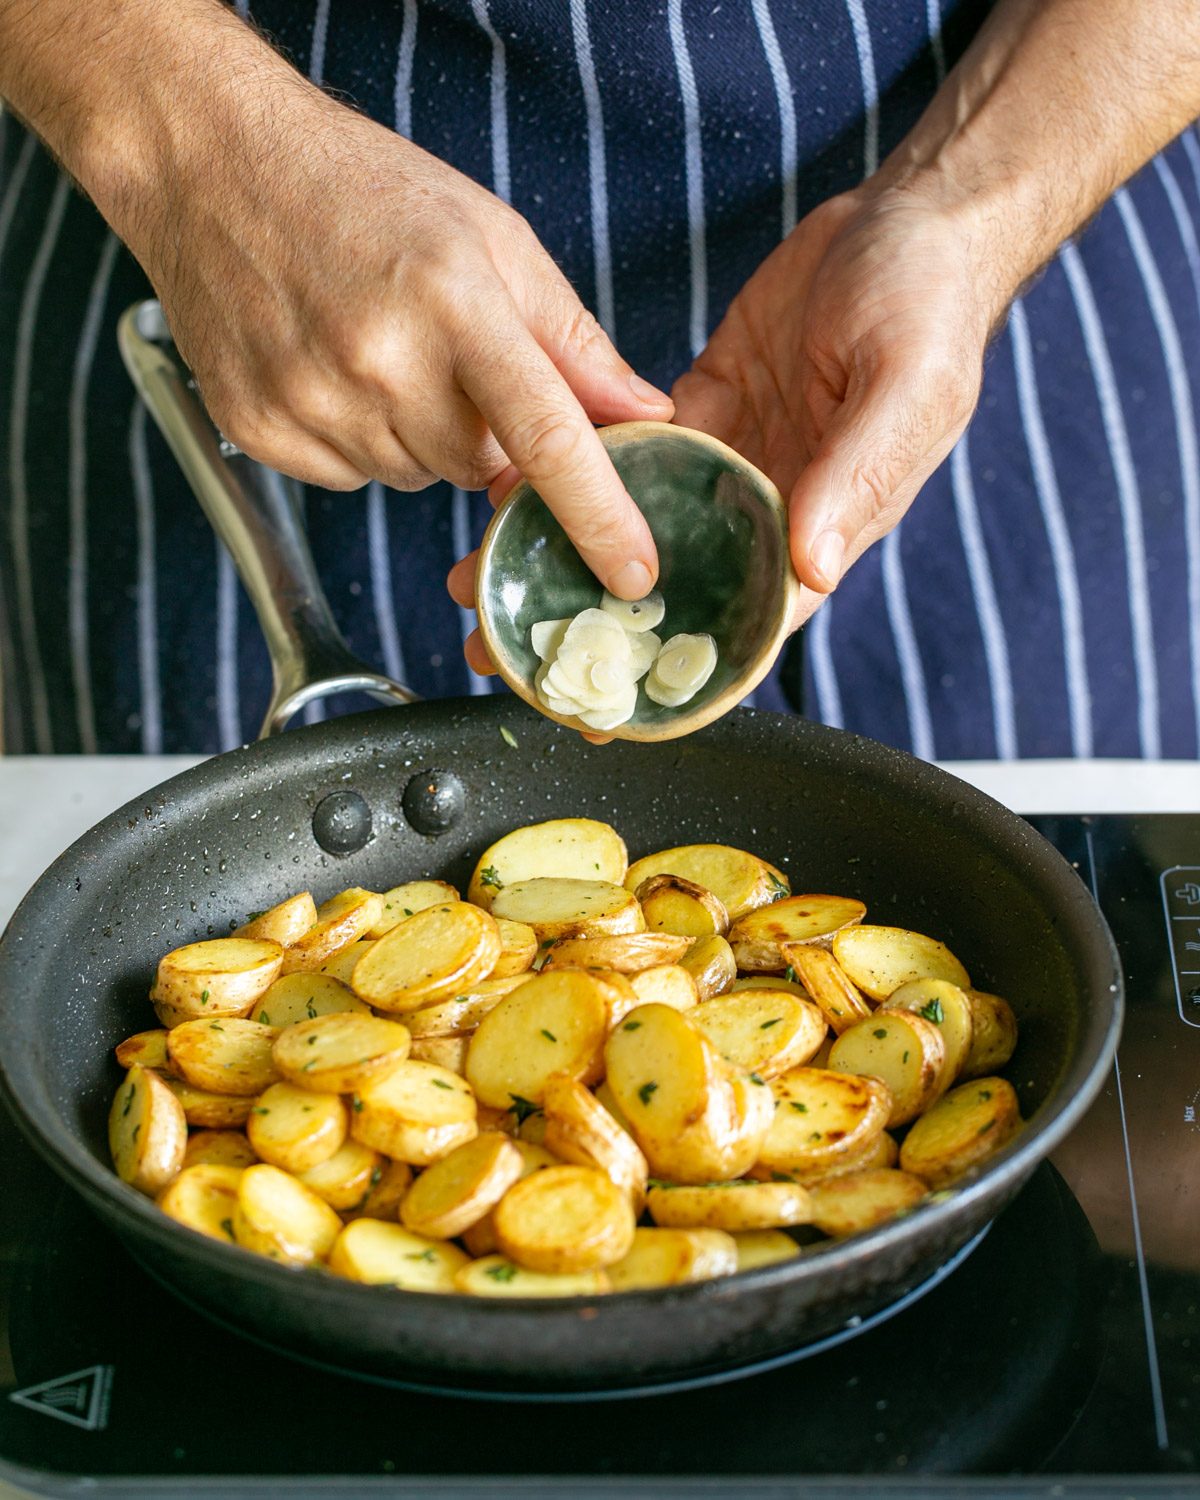 Adding sliced garlic to the potatoes